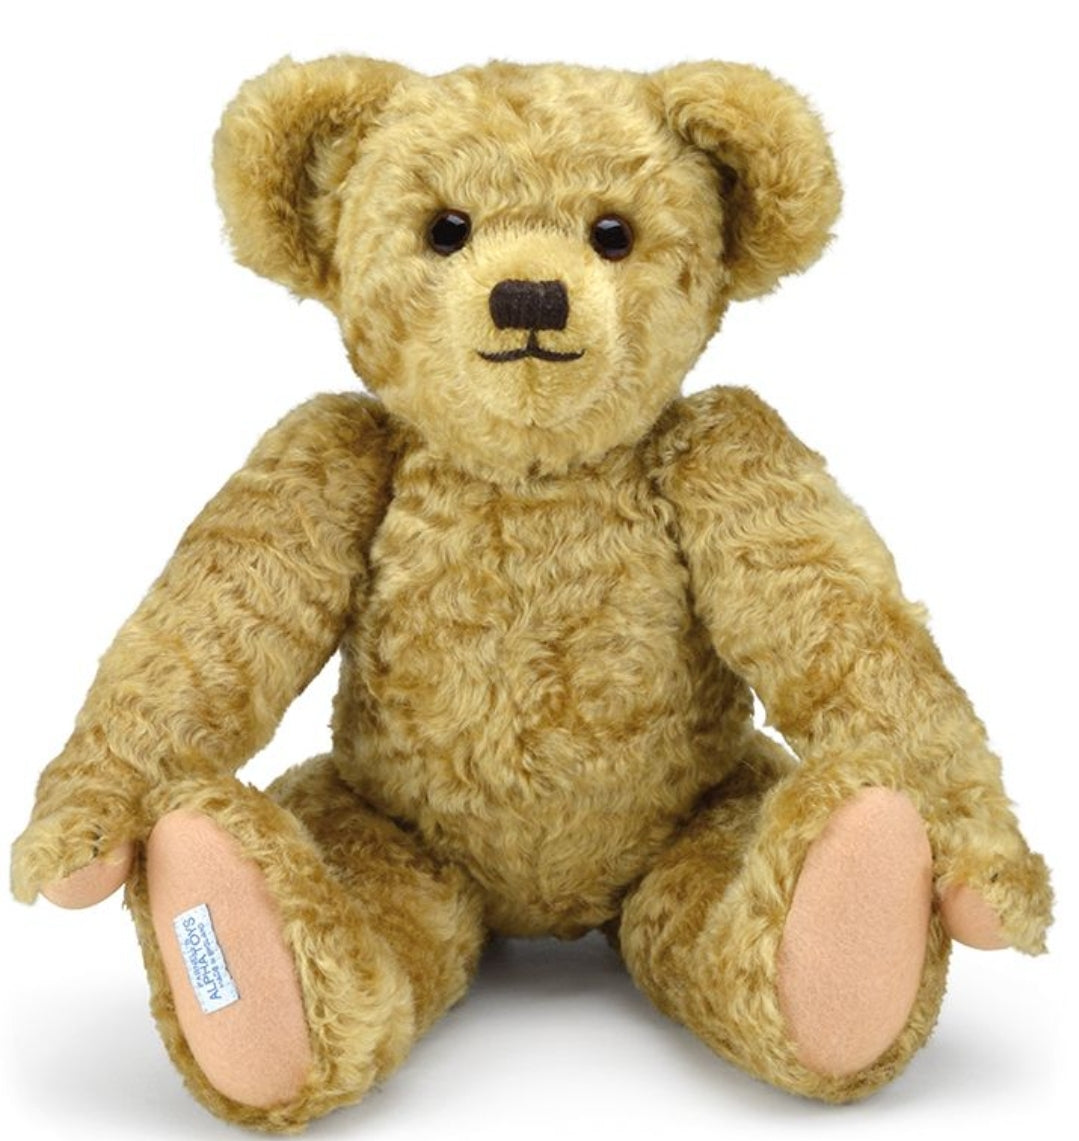 Edward - 18" Christopher Robin's Teddy Bear by Merrythought